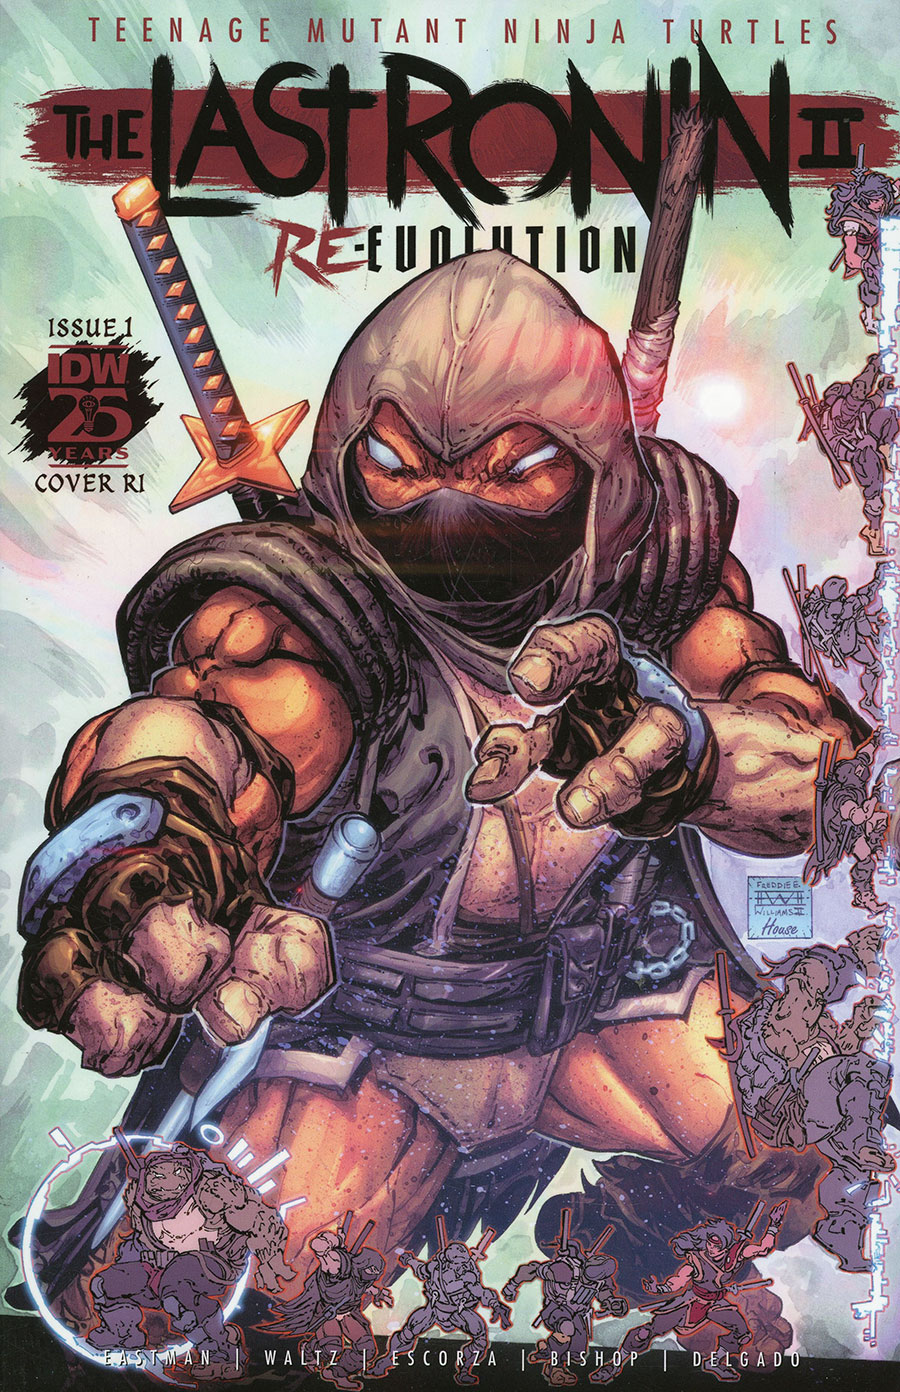 Teenage Mutant Ninja Turtles The Last Ronin II Re-Evolution #1 Cover F Incentive Freddie E Williams II Variant Cover